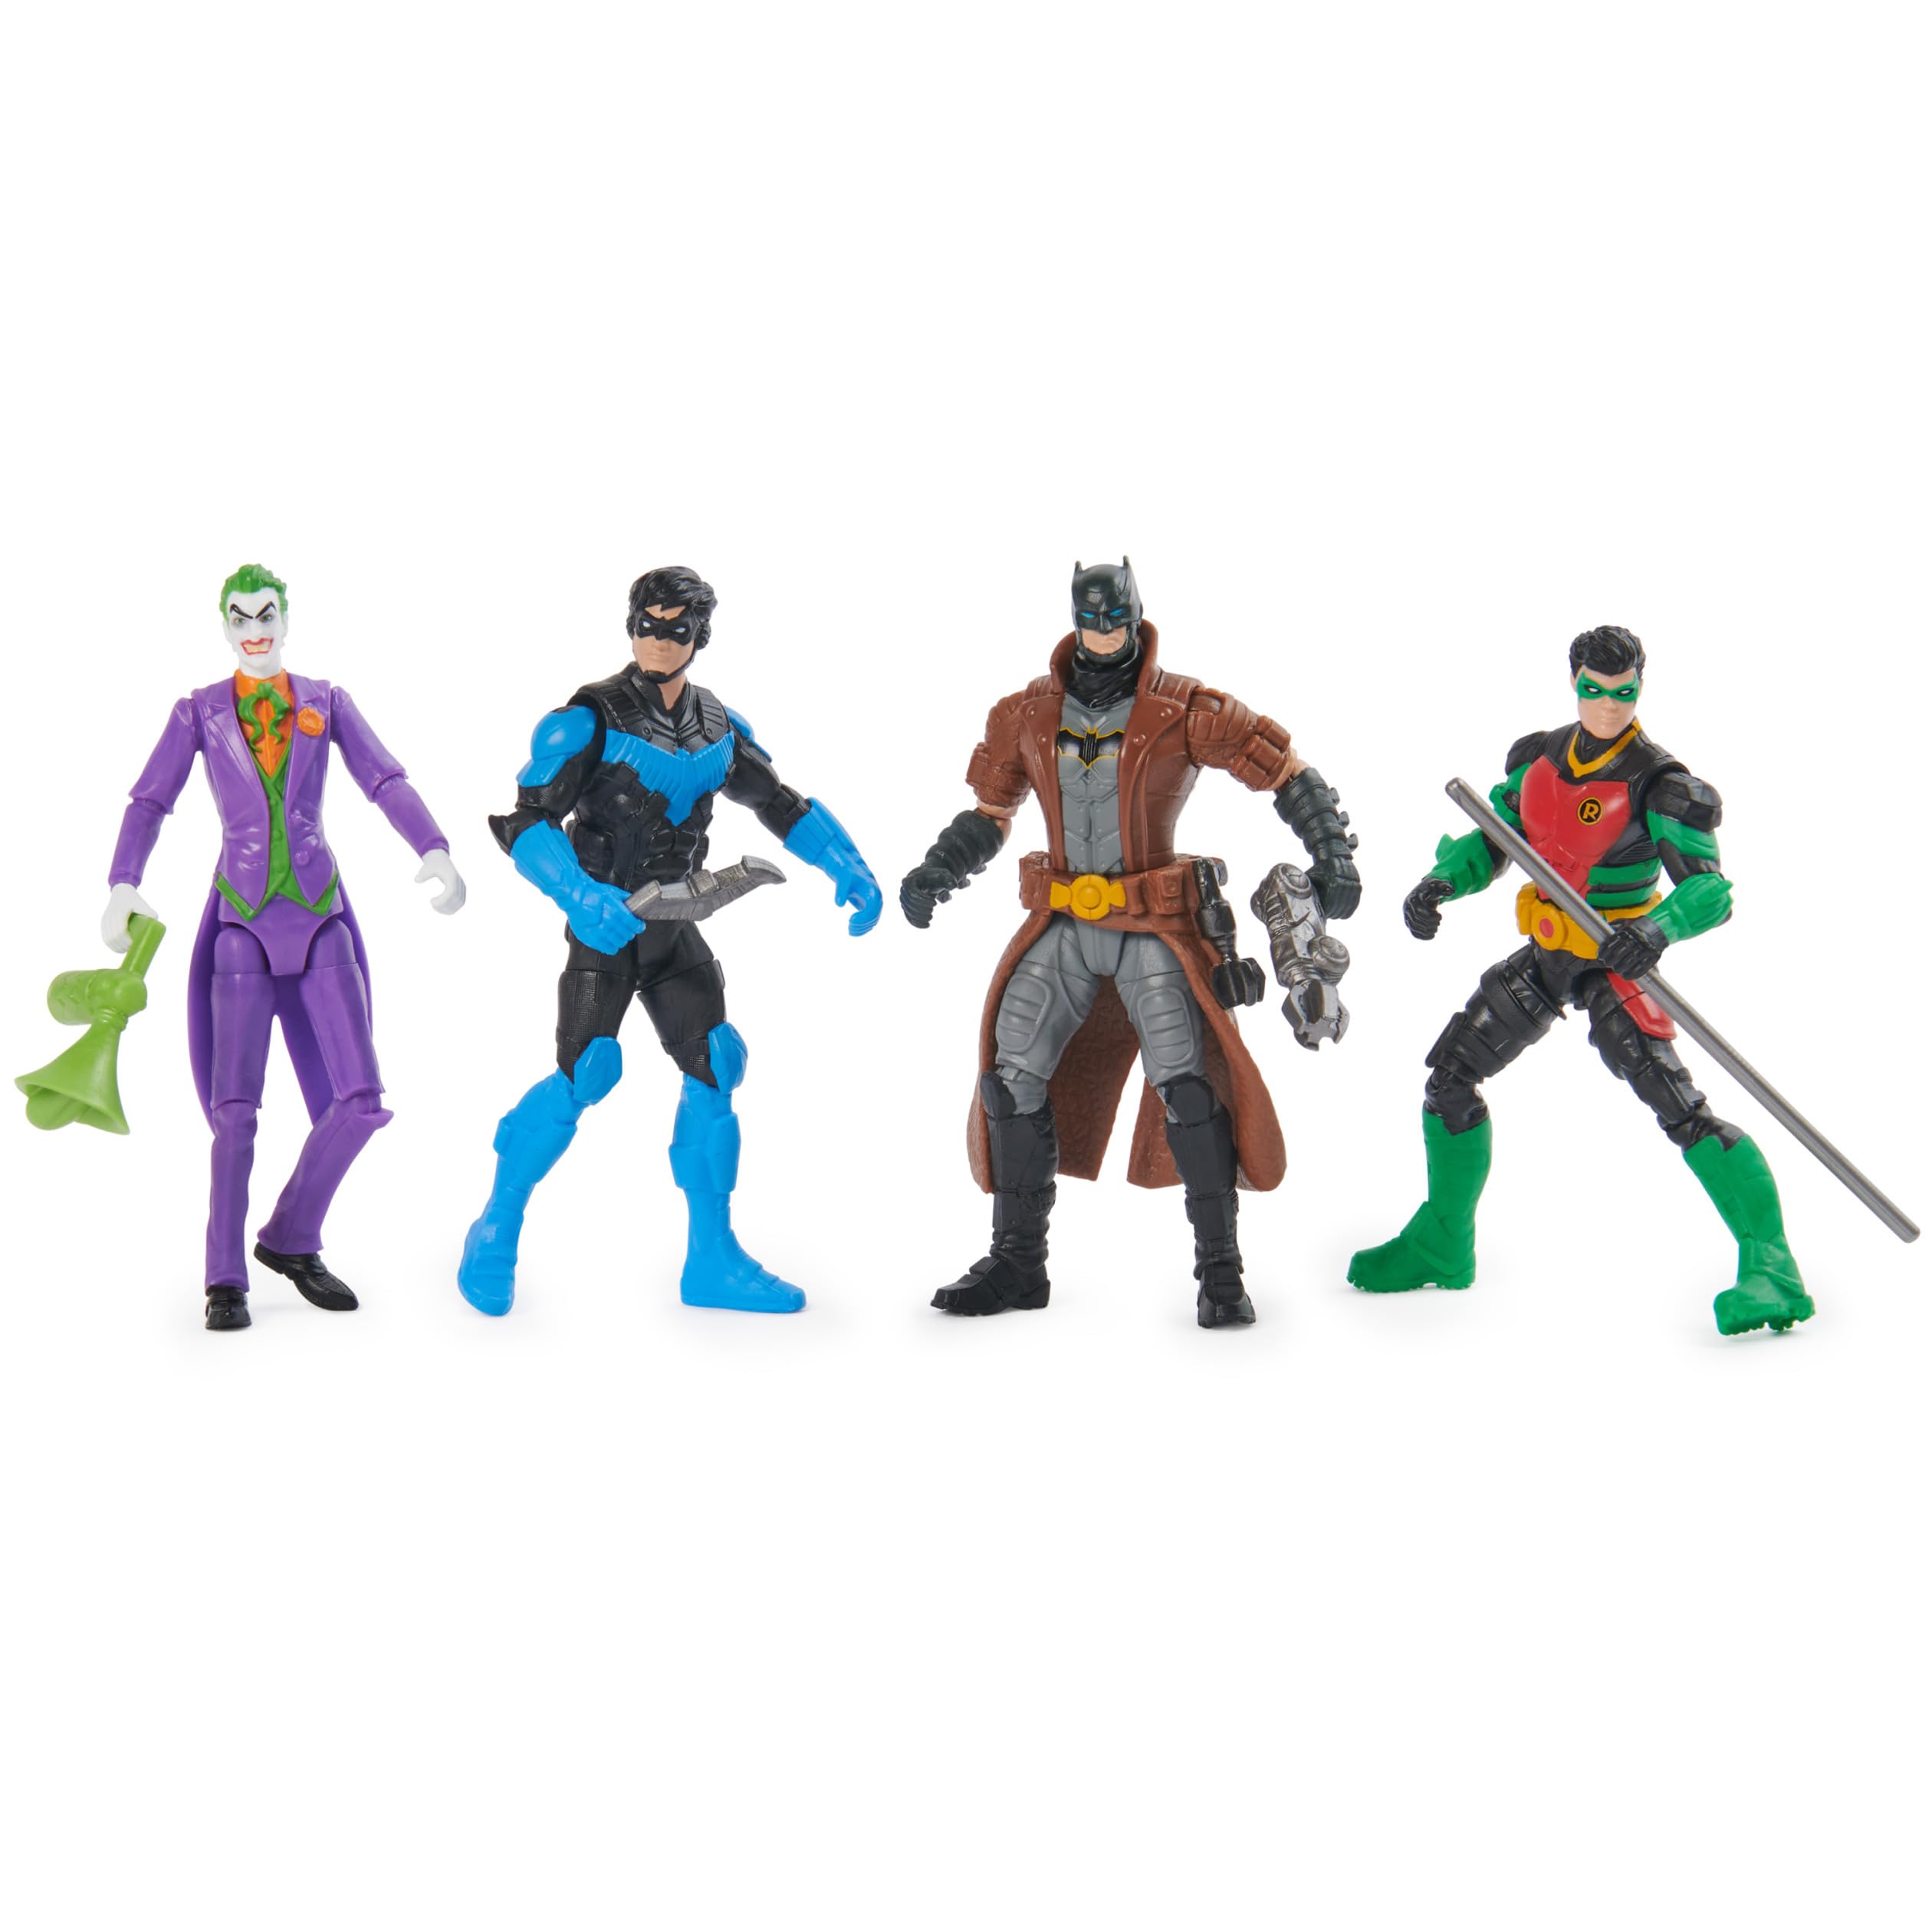 DC Comics, Batman, Team Up 4-Pack (Amazon Exclusive), Batman, The Joker, Robin, Nightwing 4-inch Action Figures, Super Hero Kids Toys for Boys & Girls